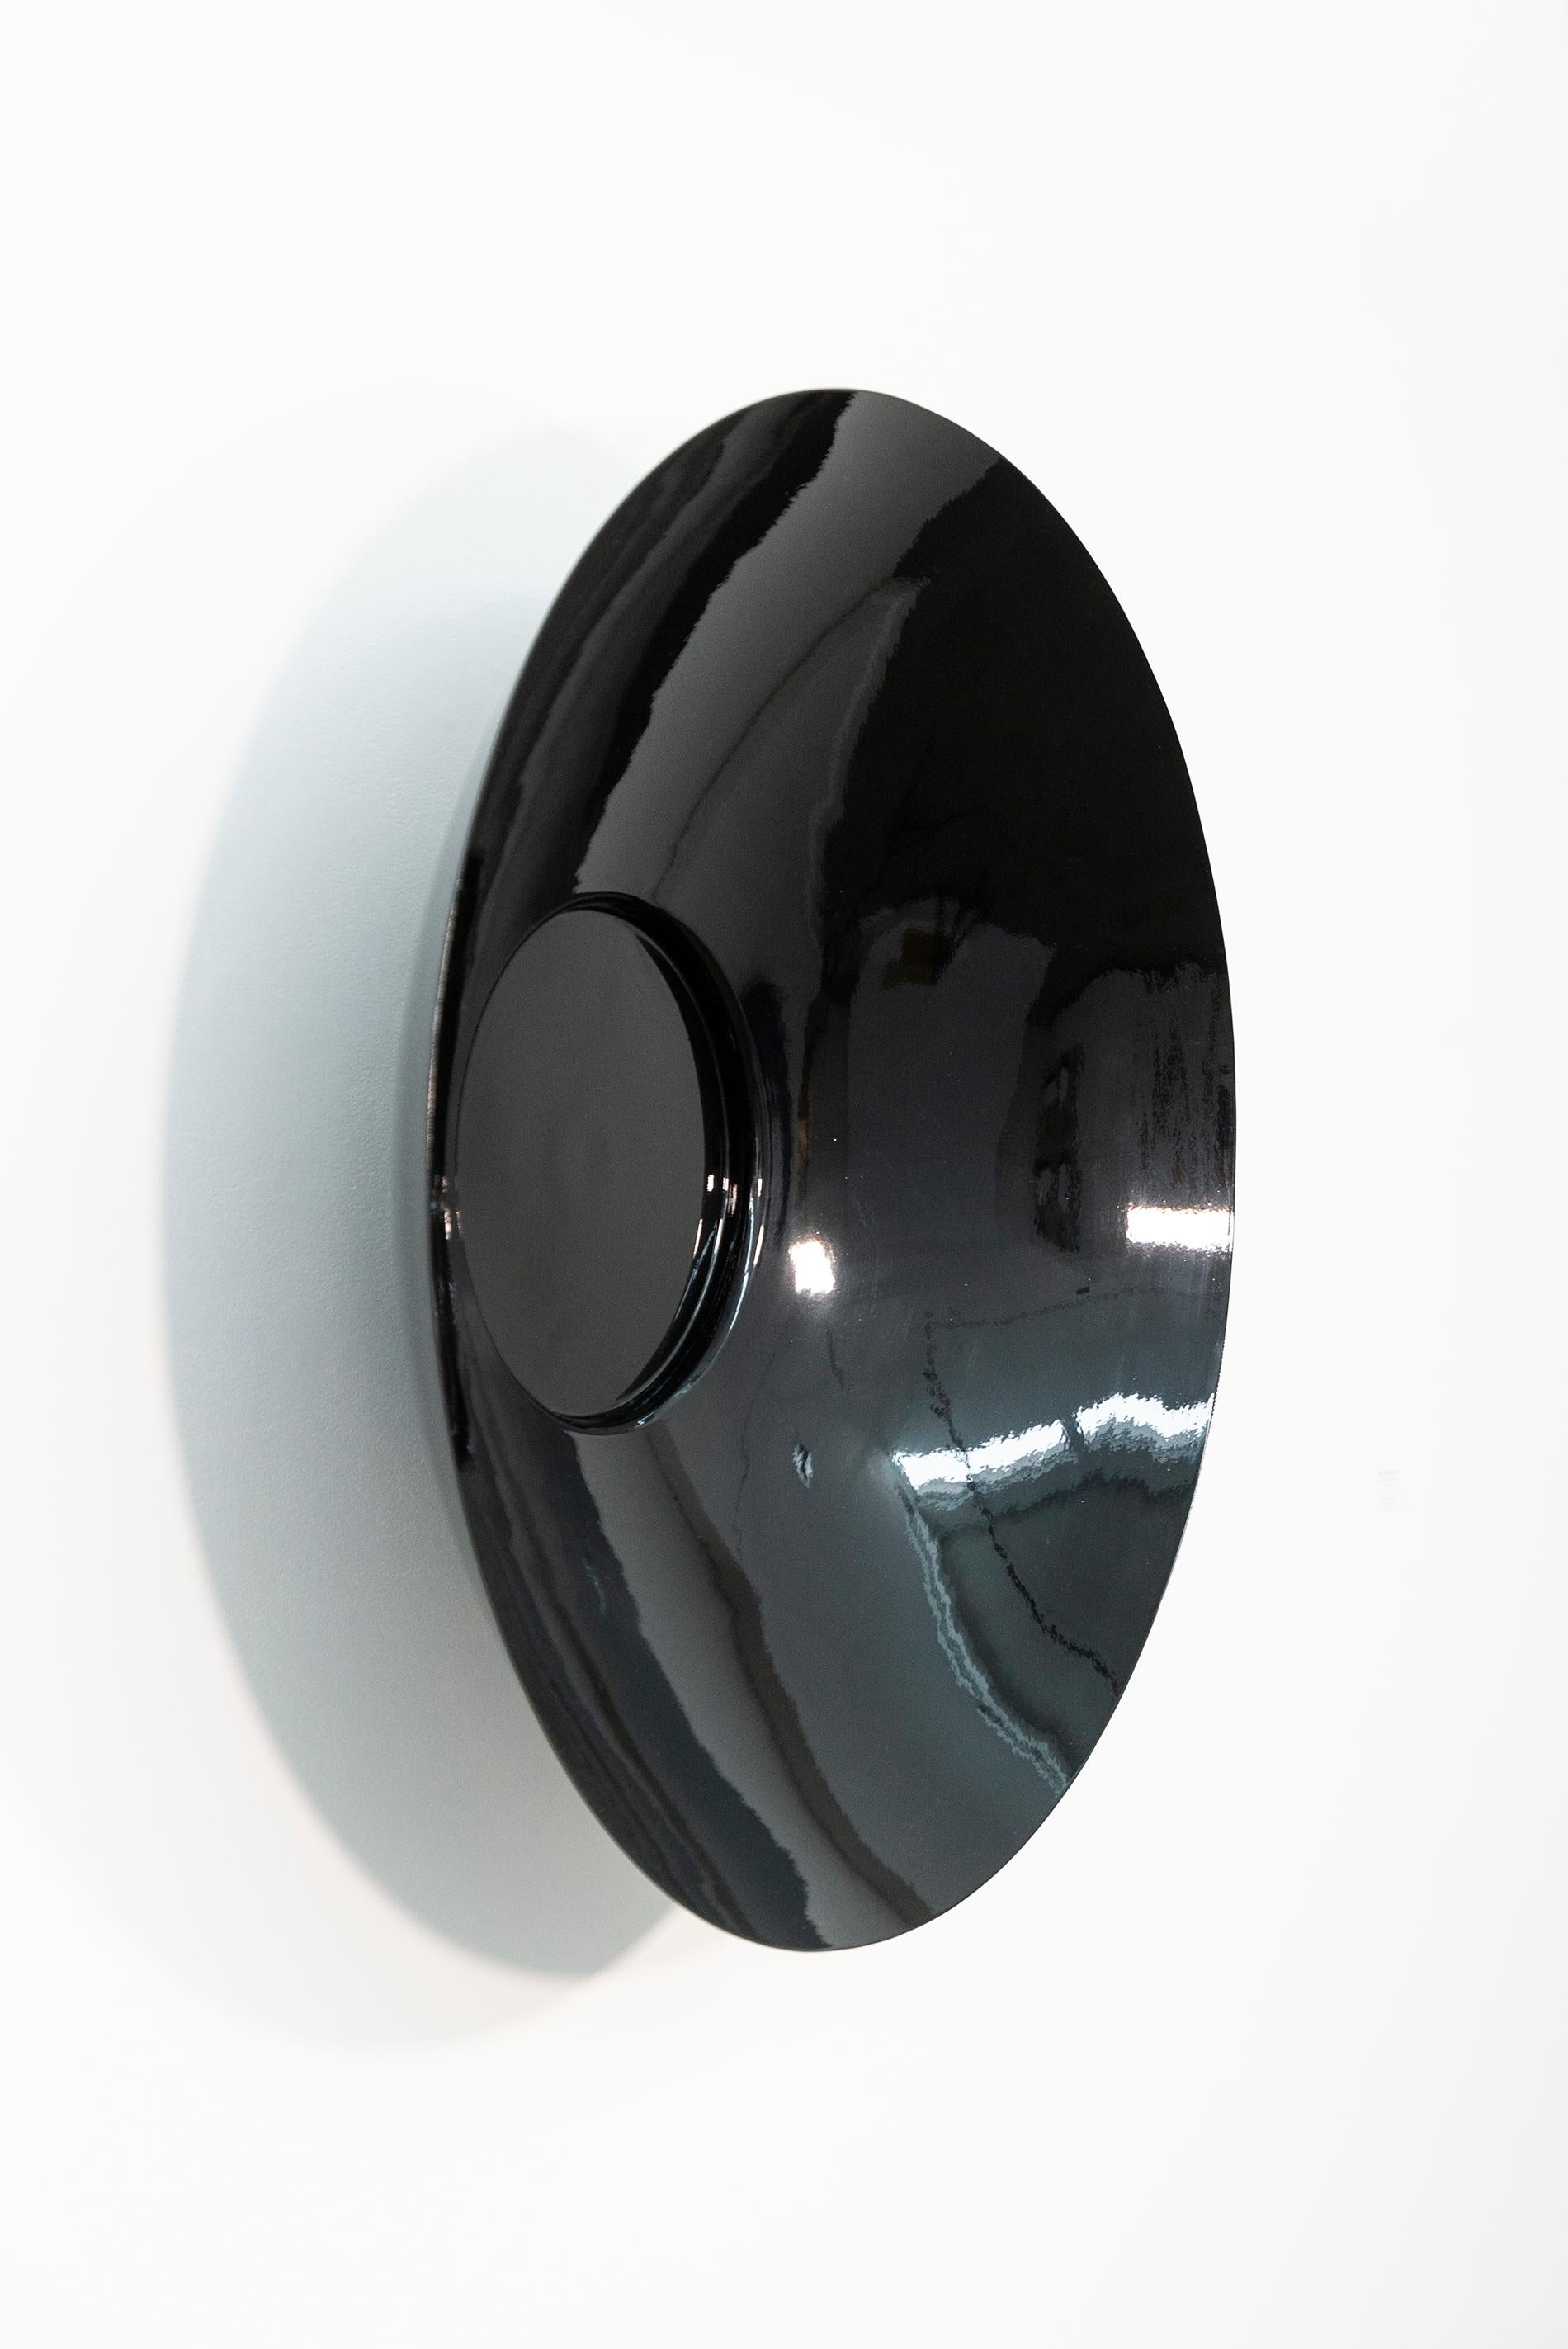 Singing Vessel Jet Black 32 - circular, contemporary, steel wall sculpture 2